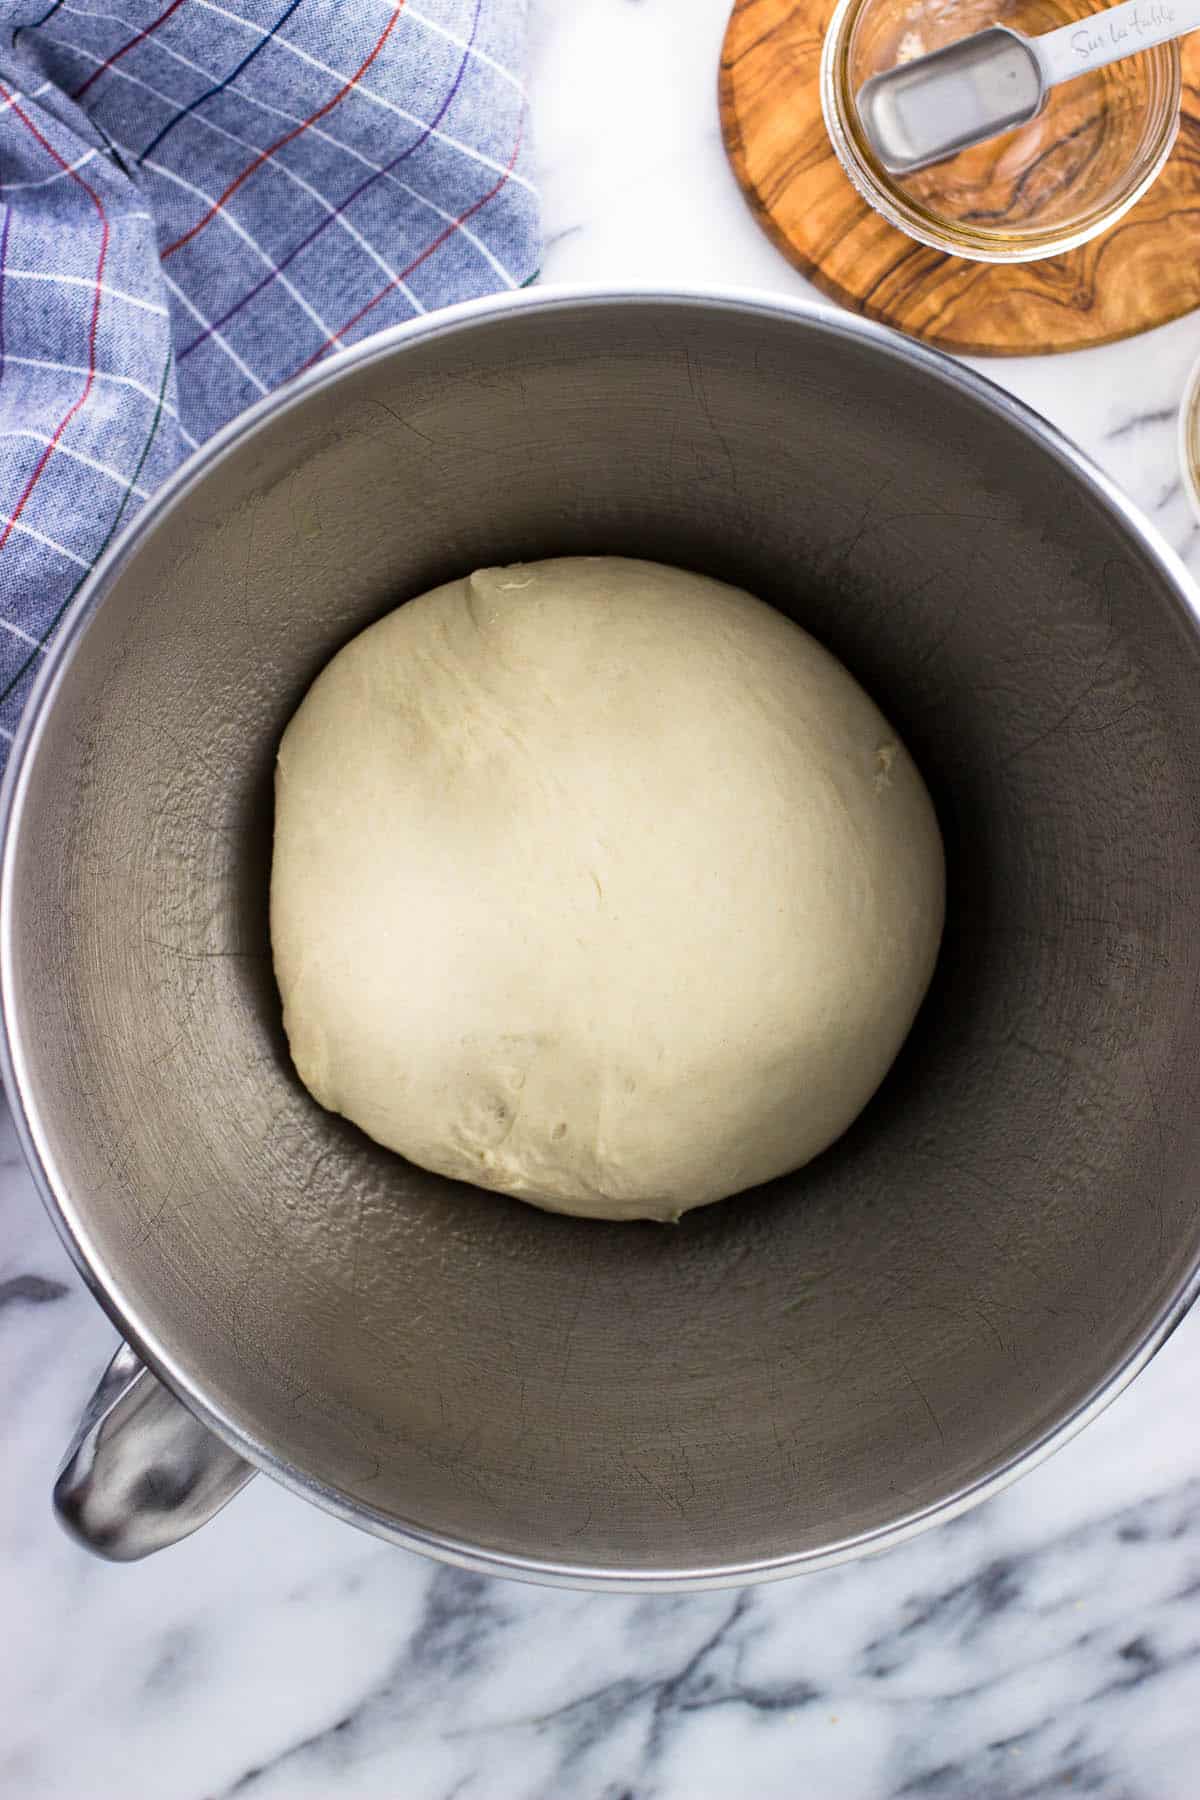 A ball of dough in a bowl pre-rise.